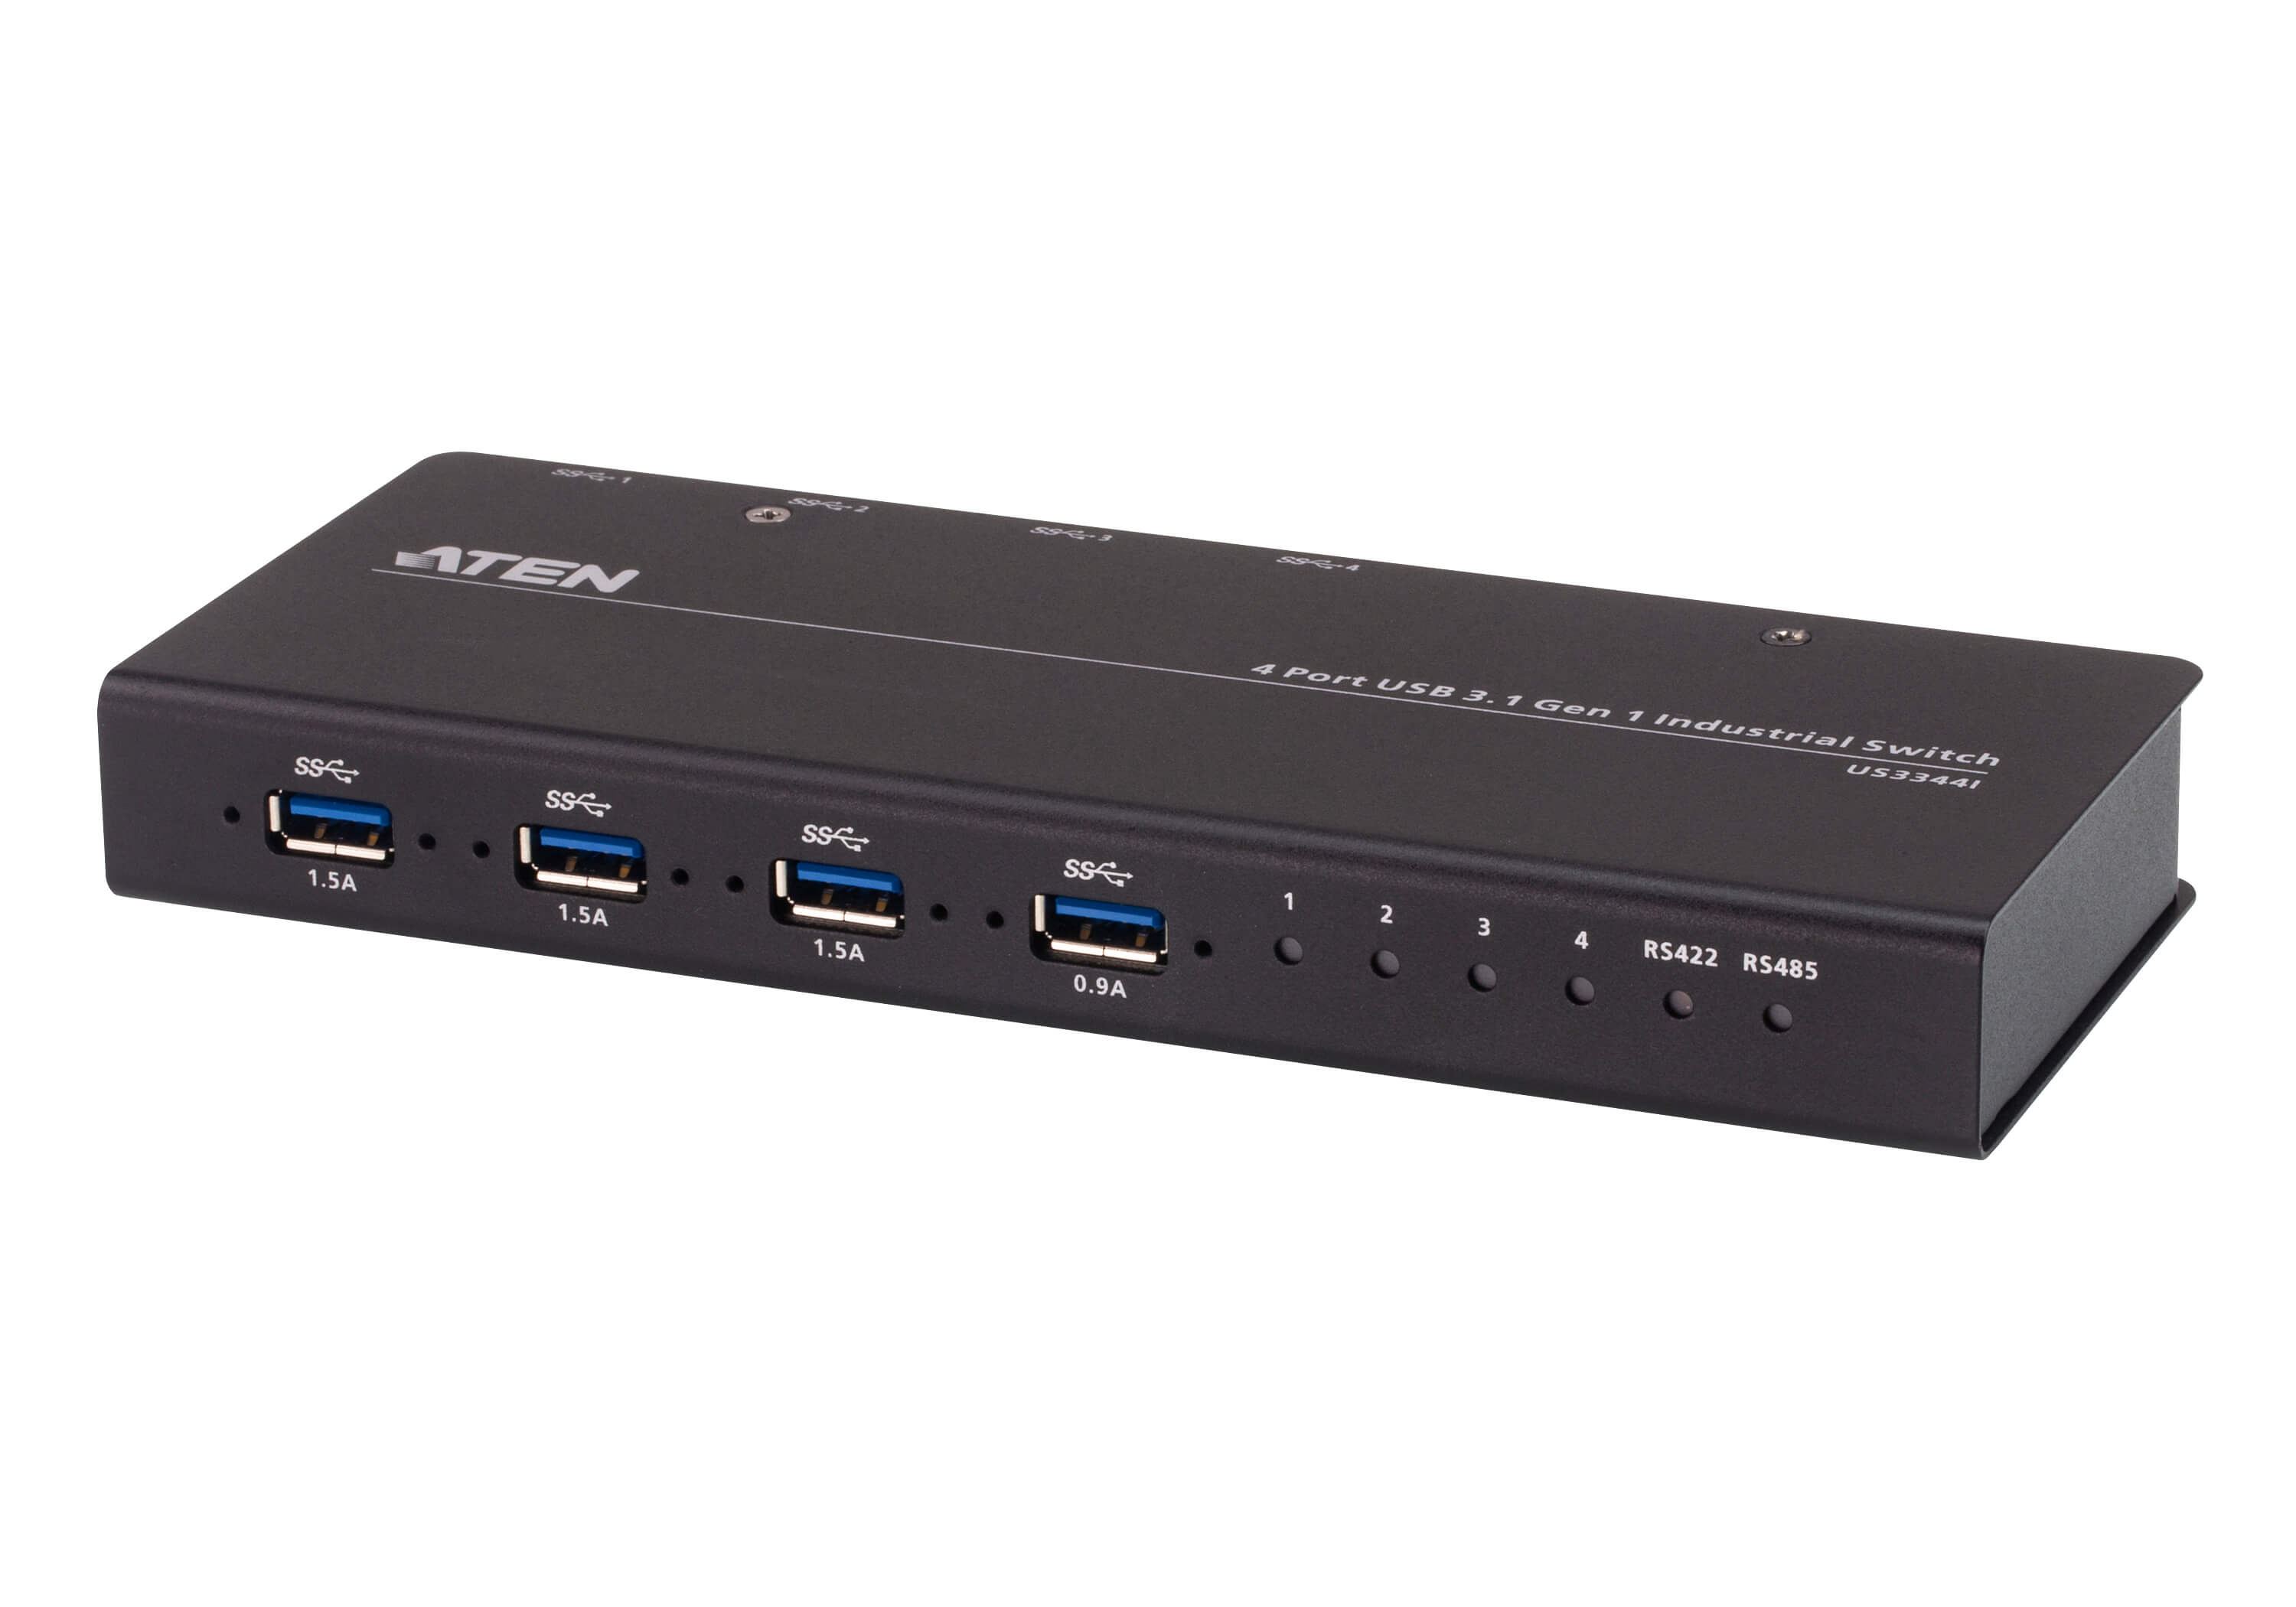 Aten US3344I-AT 4X4 USB 3.1 Gen1 Industrial Hub Switch